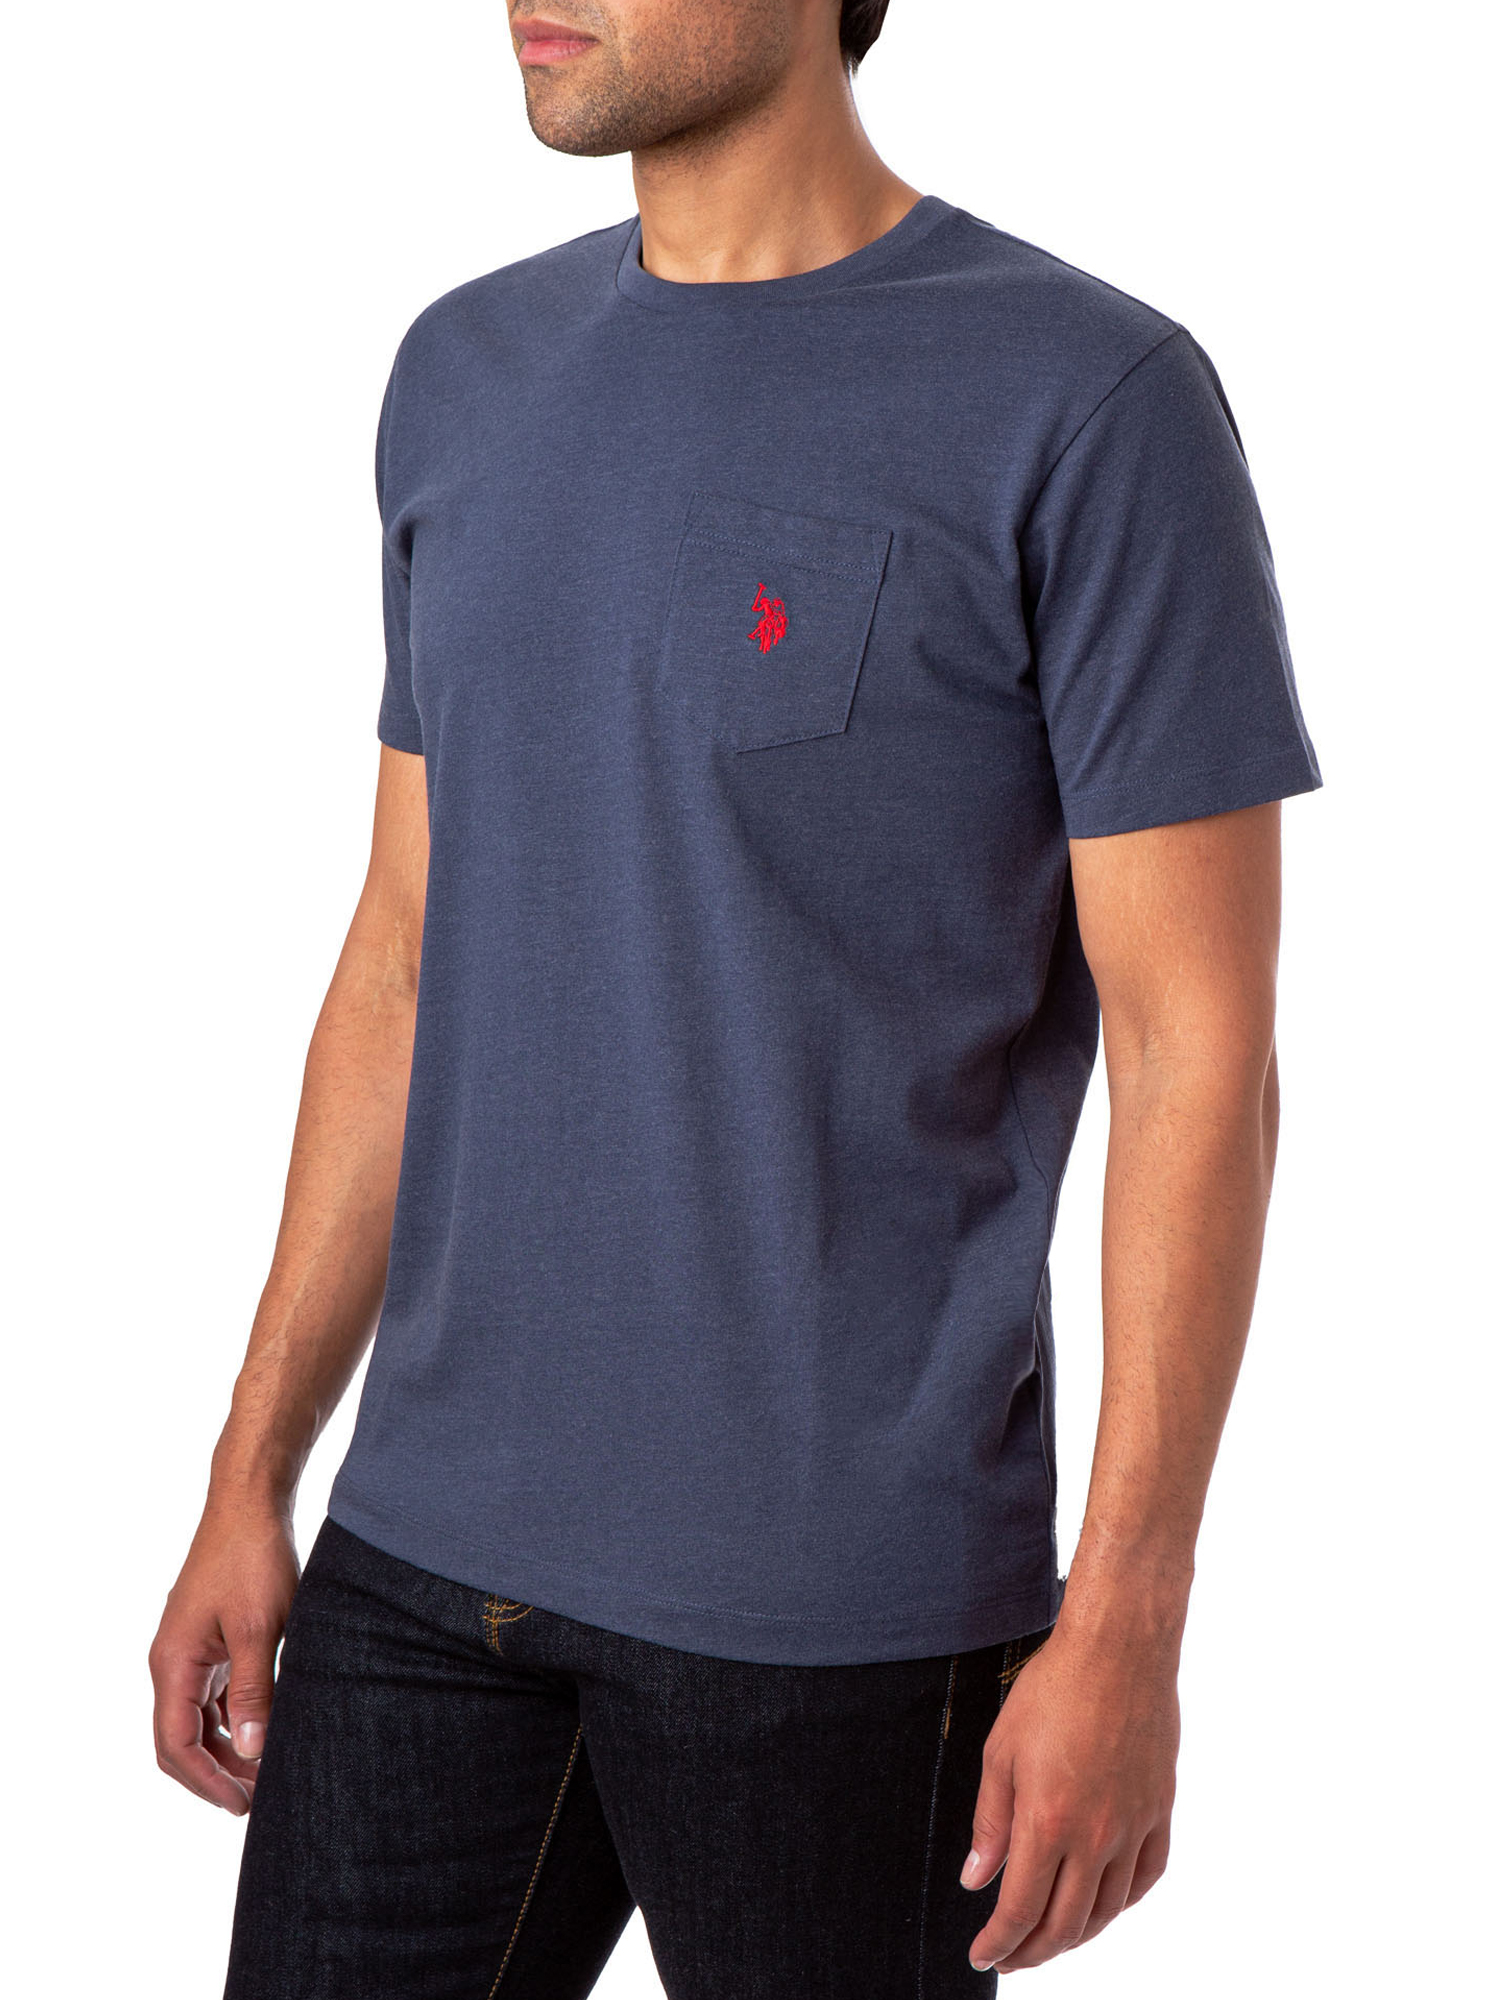 U.S. Polo Assn. Men's Pocket T-Shirt - image 3 of 3